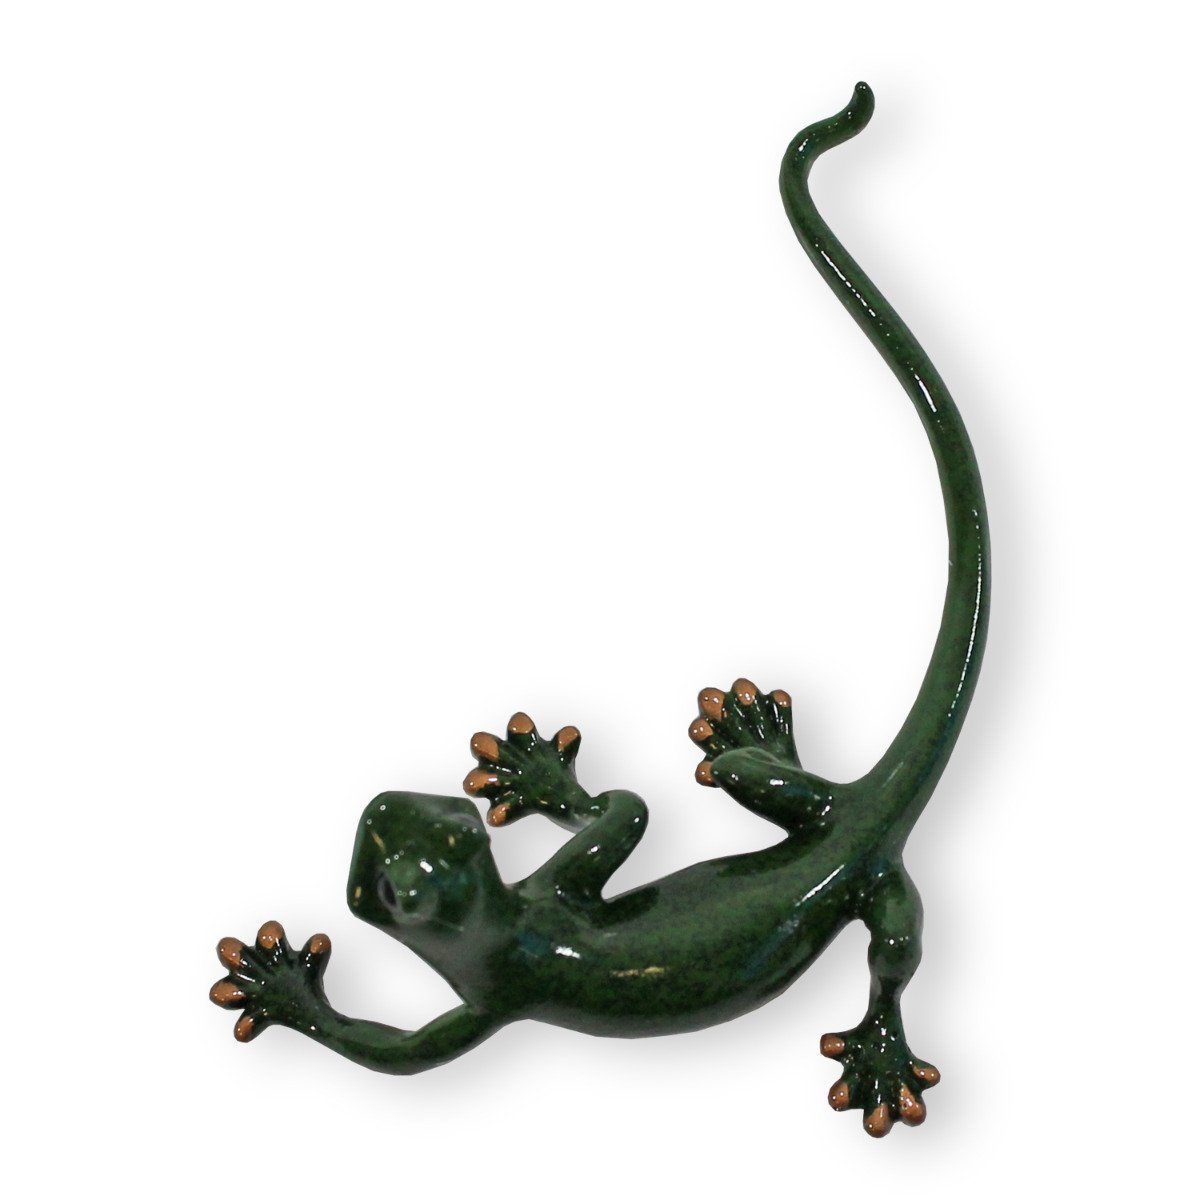 Echse glänzende Dekofigur Figur Handbemalt, grüne Oberfläche Wetterfest, Deko colourliving Salamander Tierfigur,